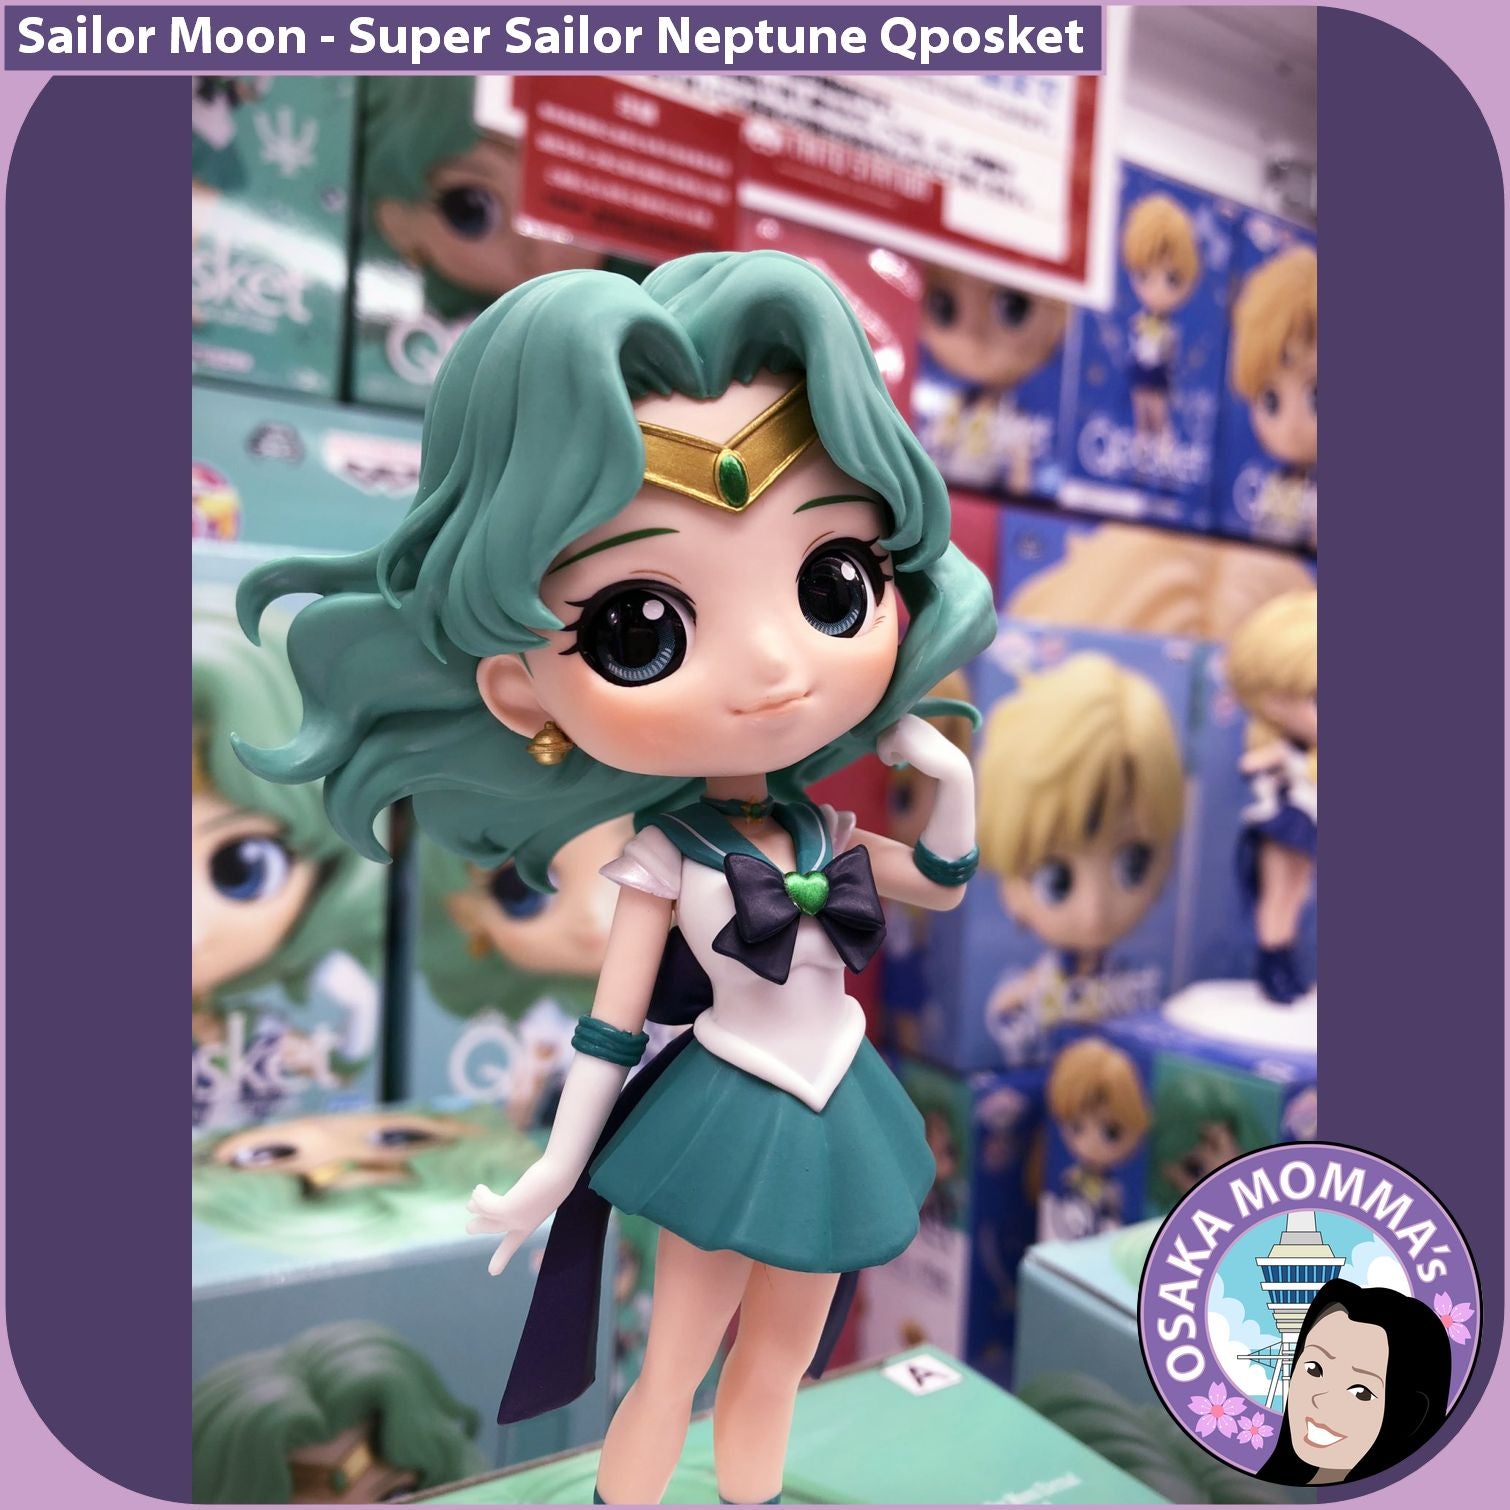 Super Sailor Neptune Qposket